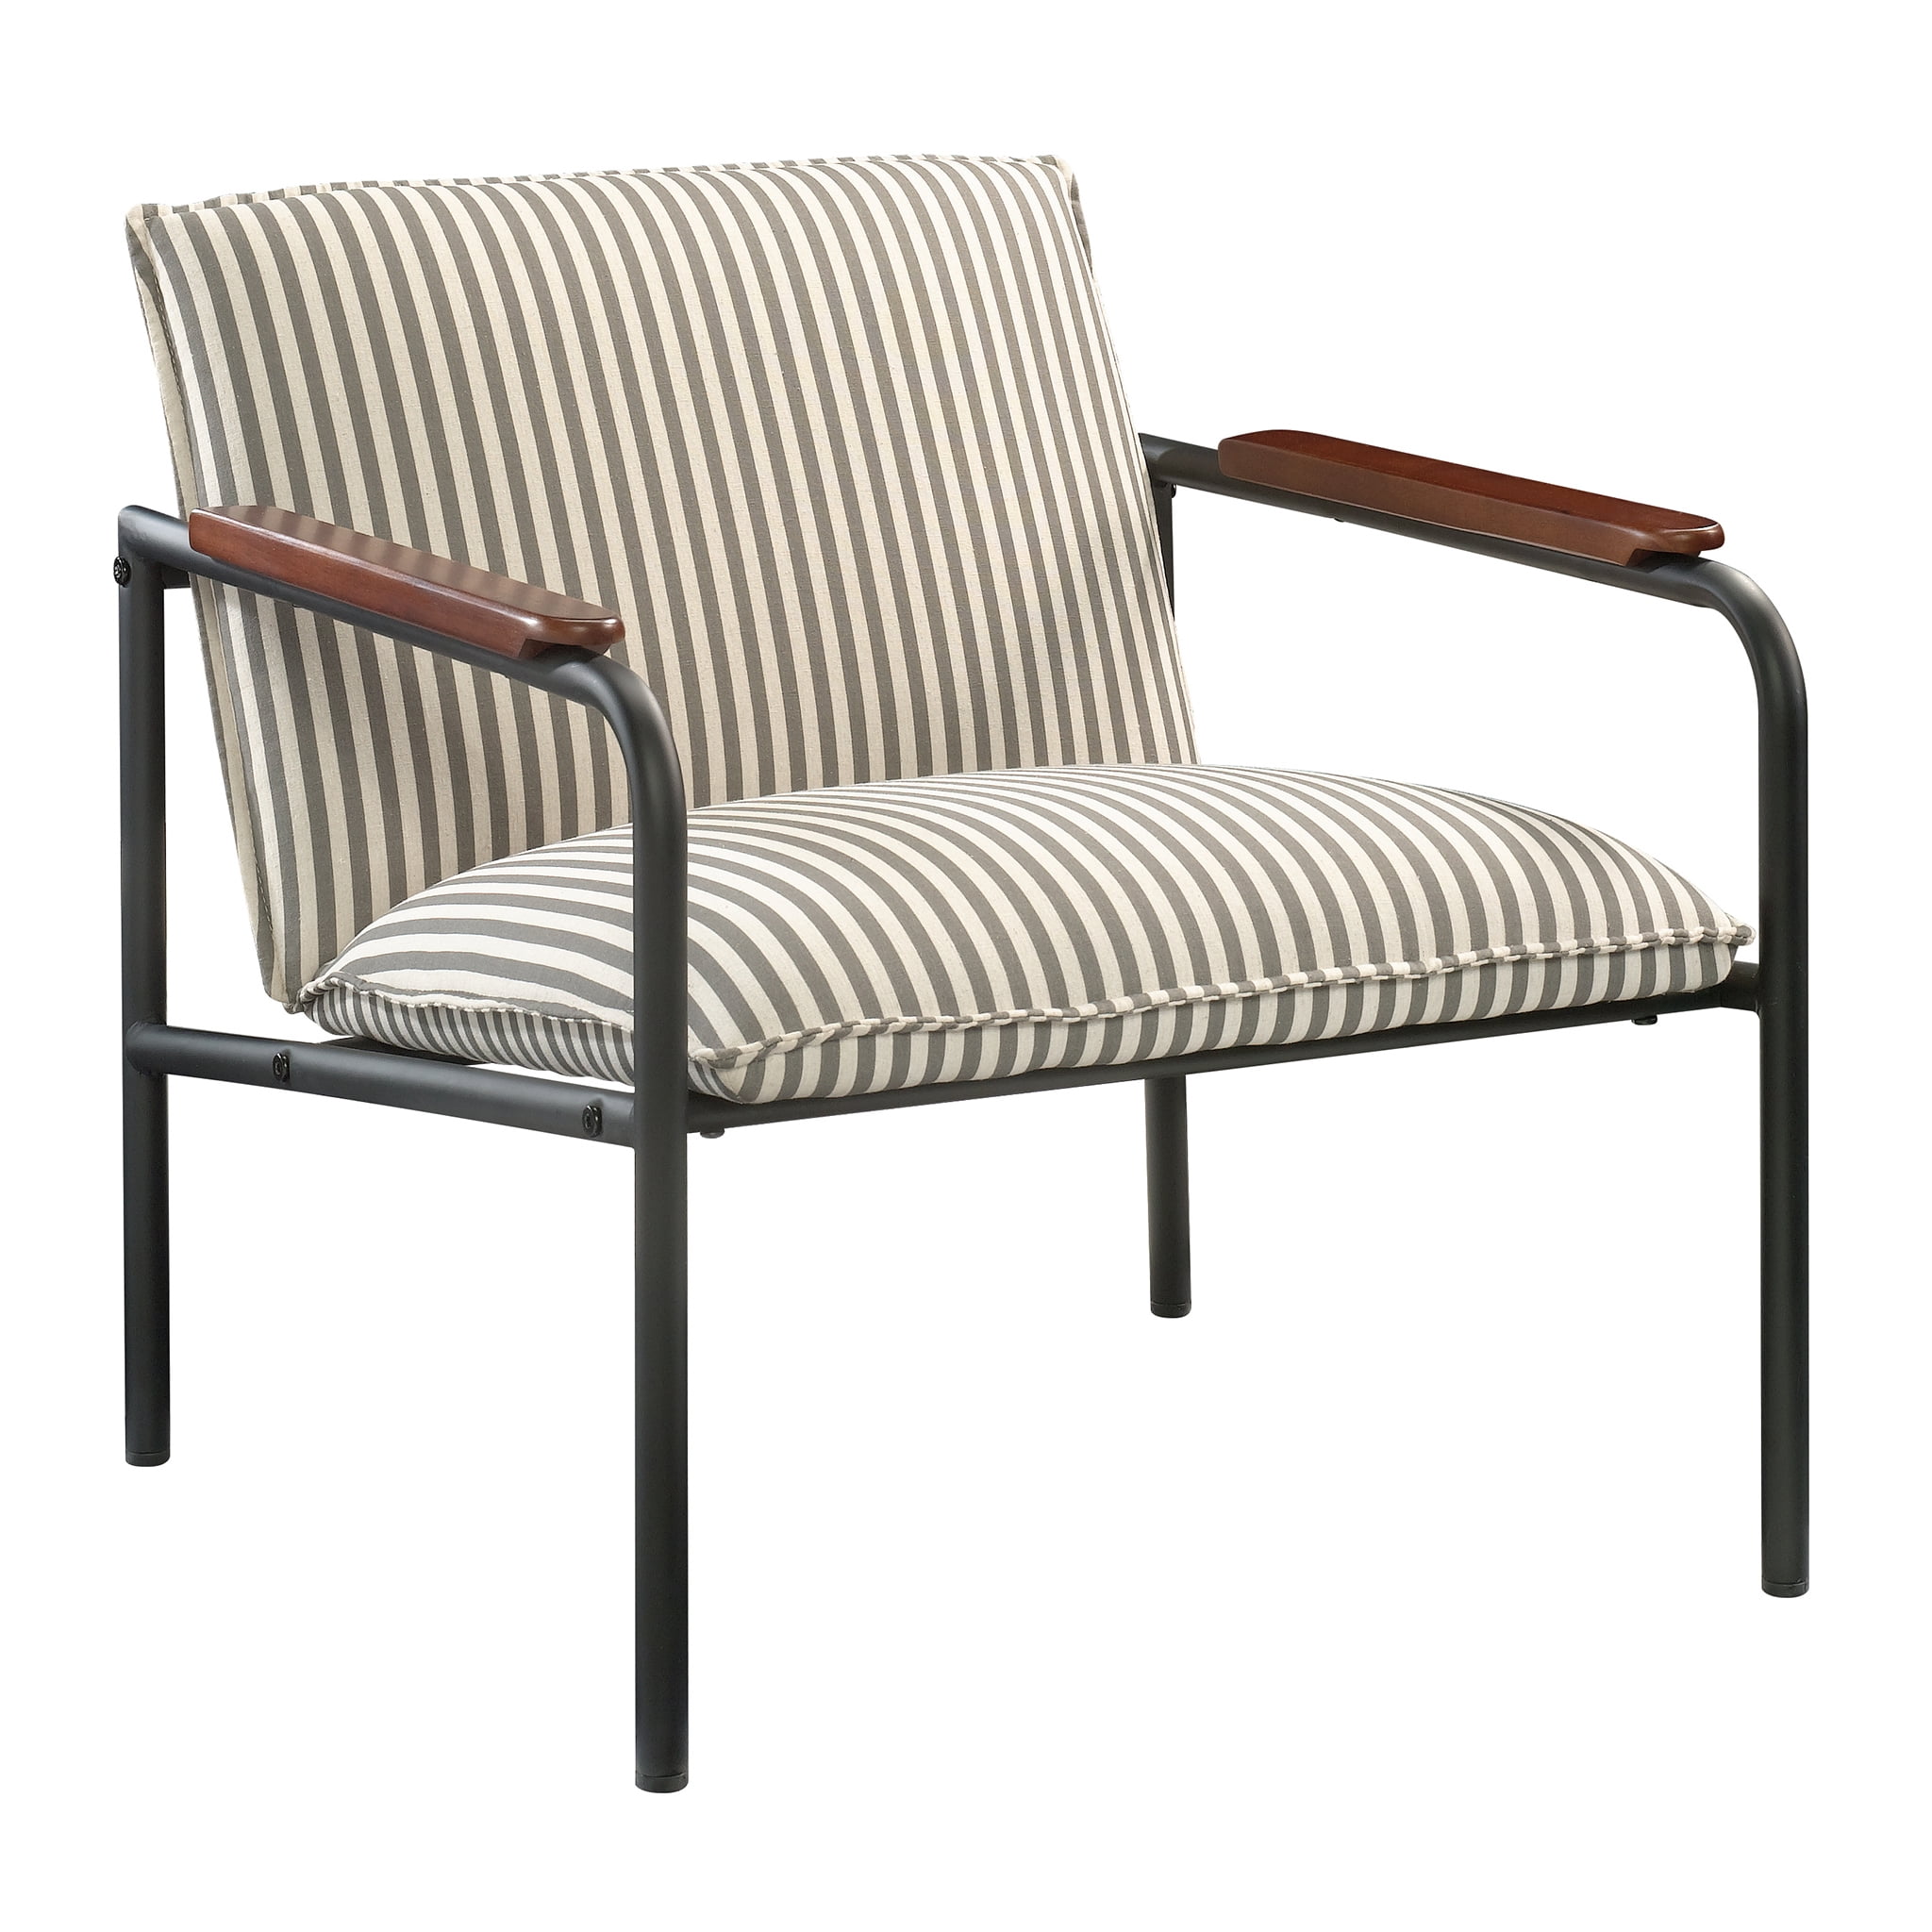 Sauder Boulevard Cafe Metal Lounge Chair Charcoal Gray finish